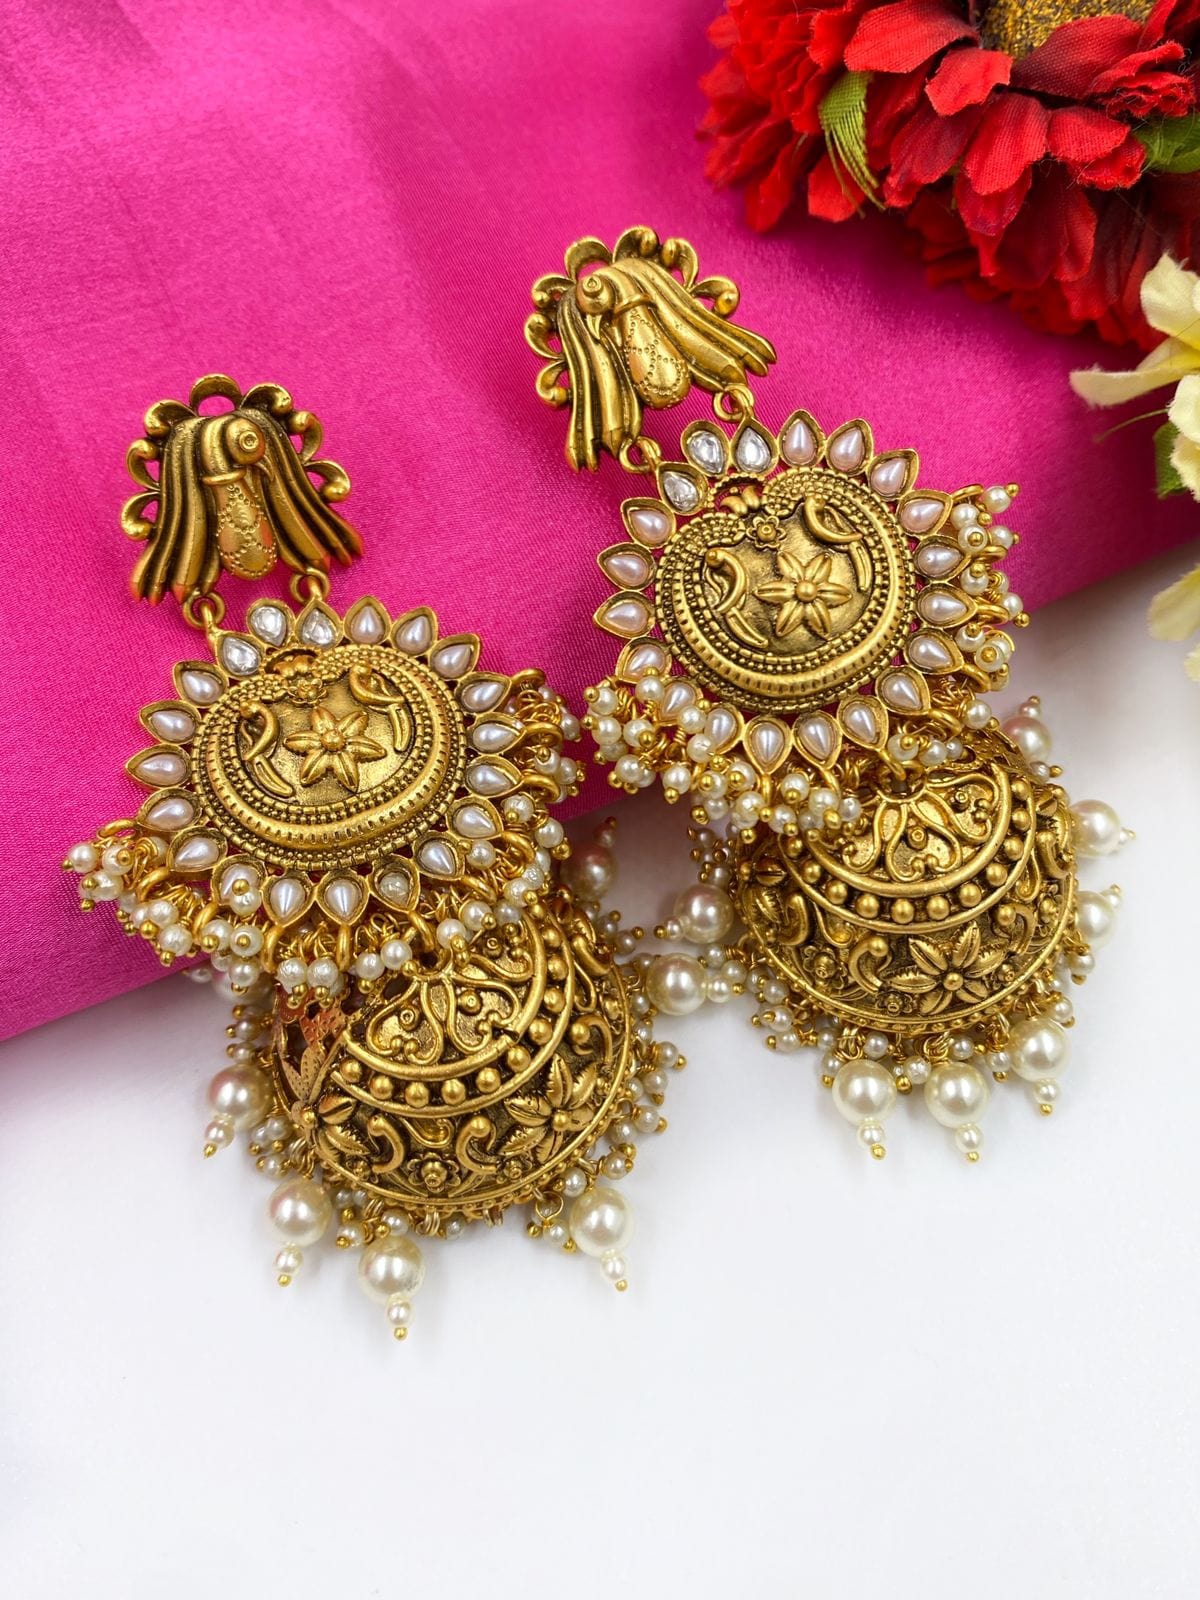 Jumkas | Bridal gold jewellery designs, Traditional wedding jewellery, Gold  earrings wedding